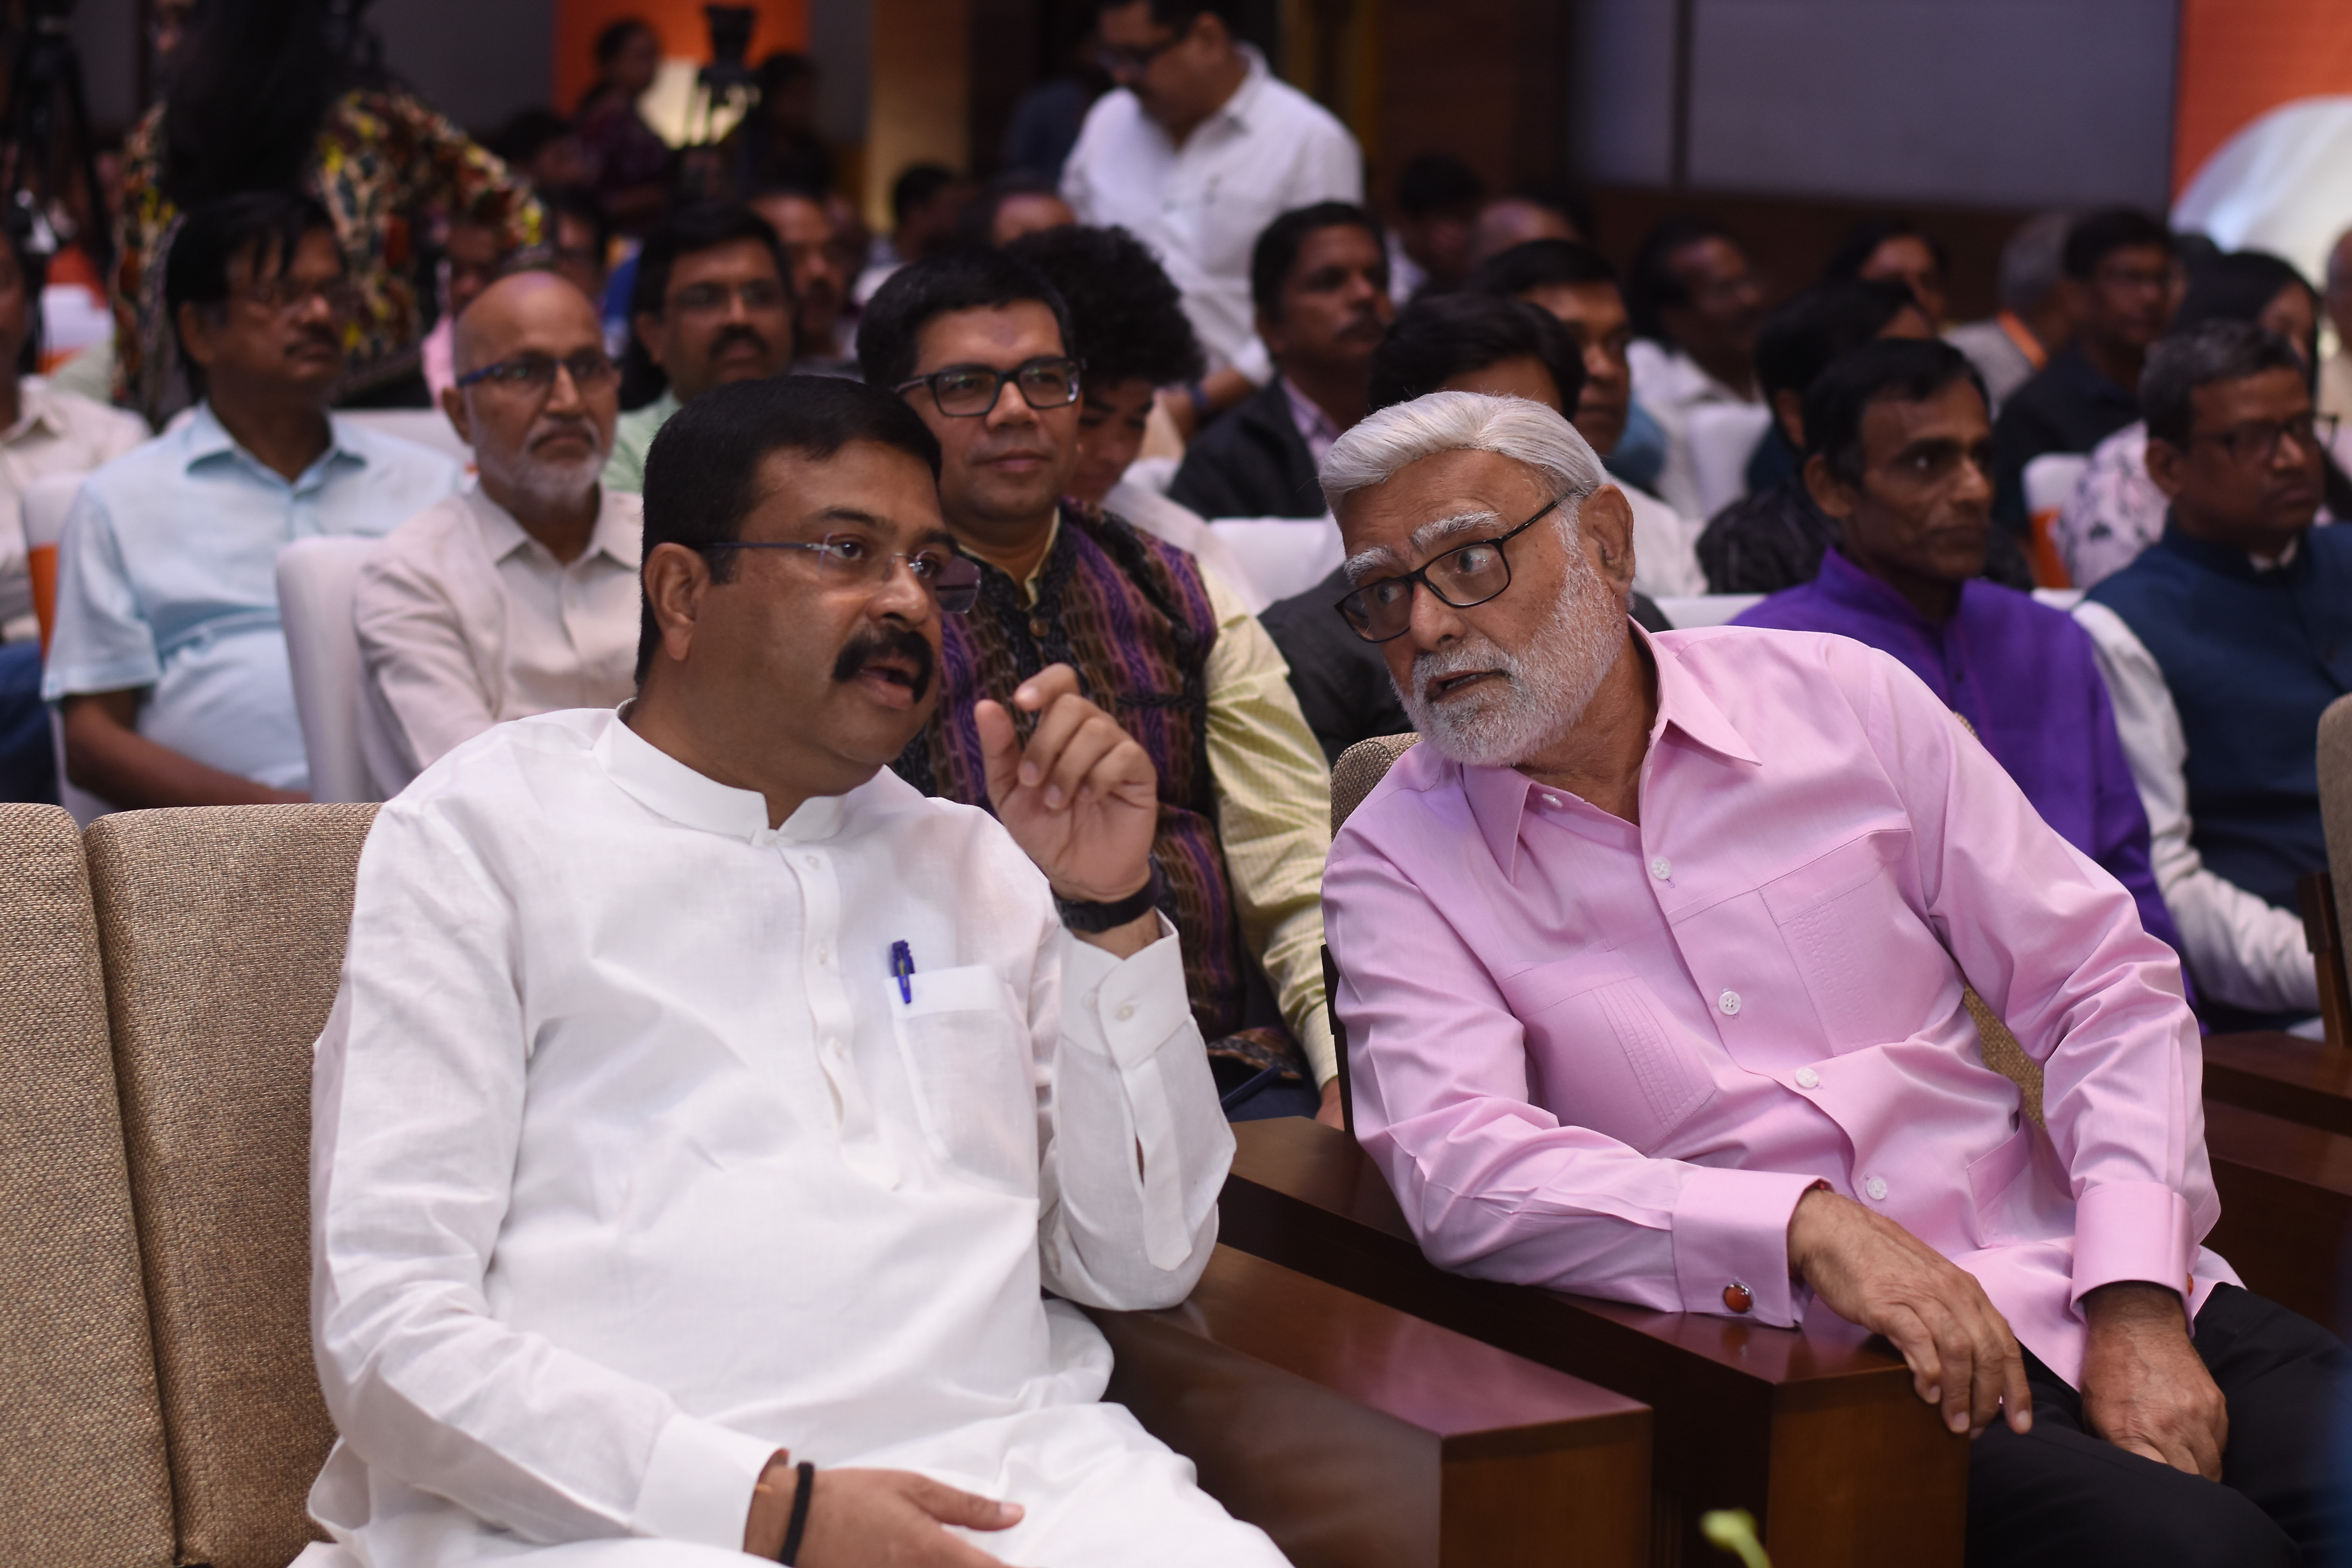 Bhubaneswar - Union Minister Dharmendra Pradhana and TNIE Editorial Director Prabhu Chawla share a moment on the first day of Odisha Literary Festival in Bhubaneswar. Express / DEBADATTA MALLICK